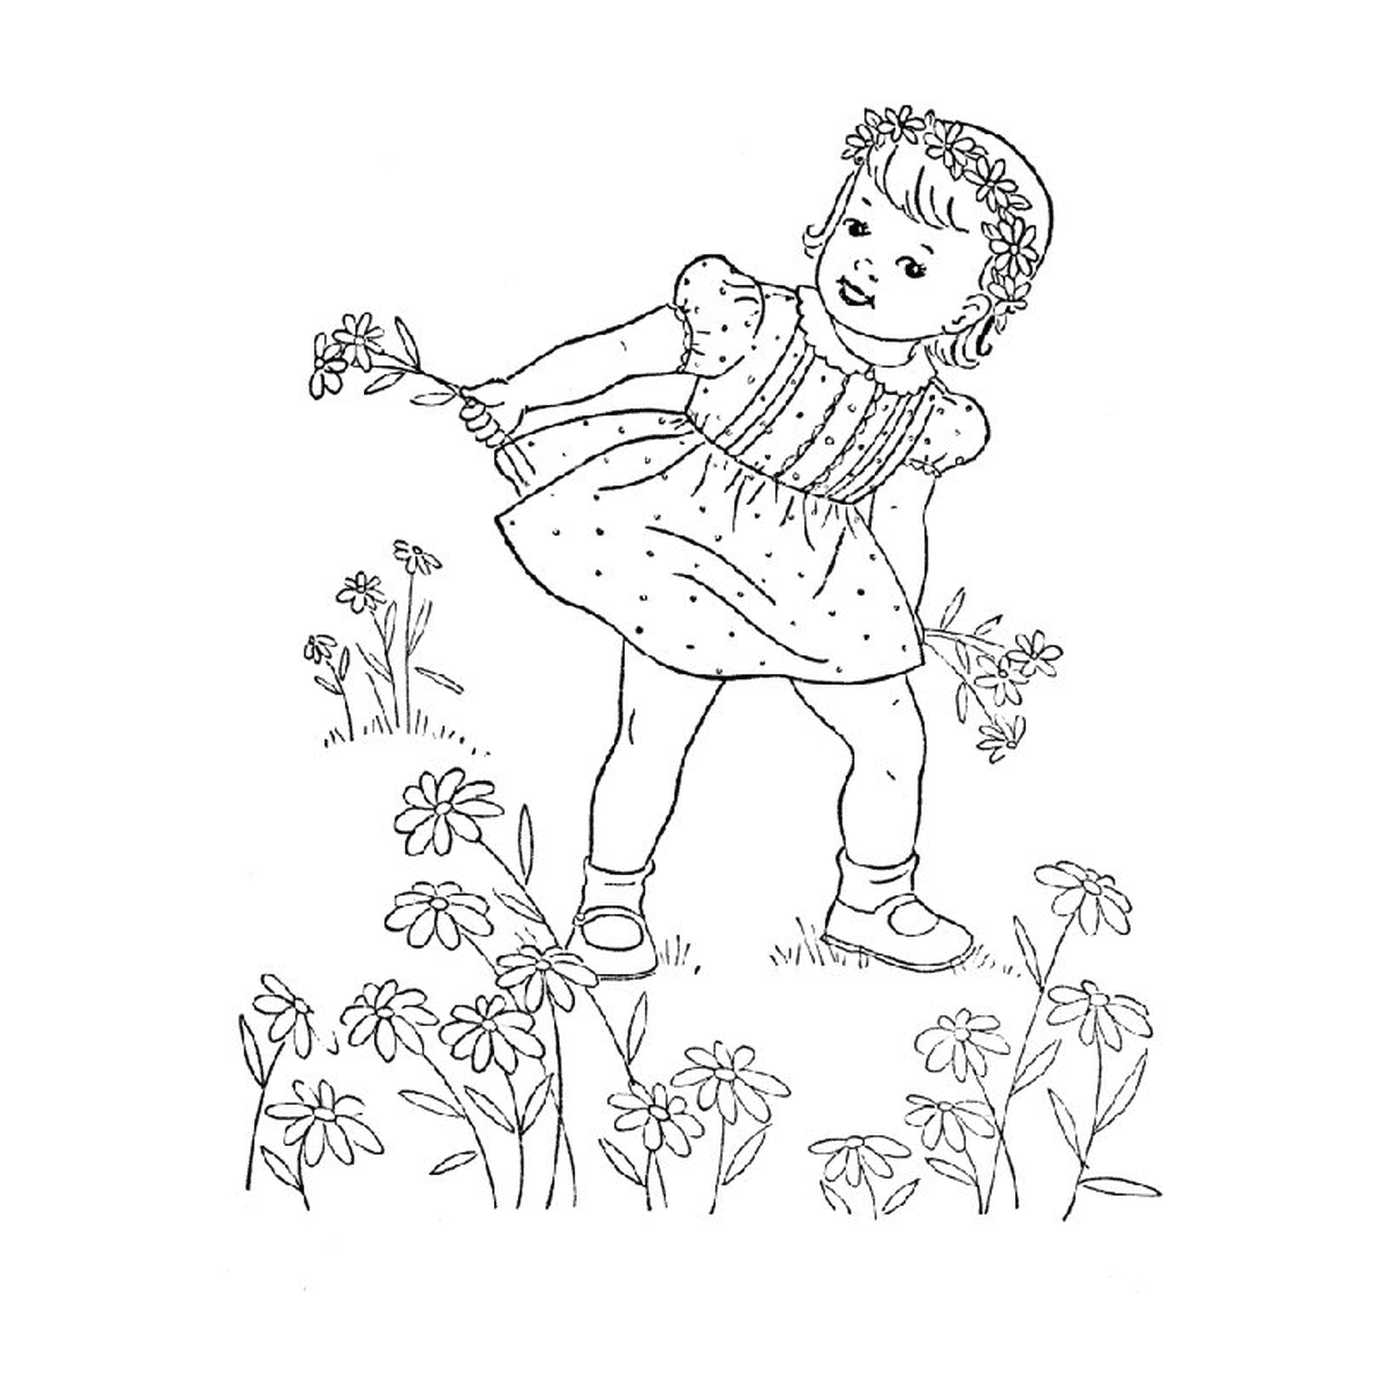  A little girl holding flowers 